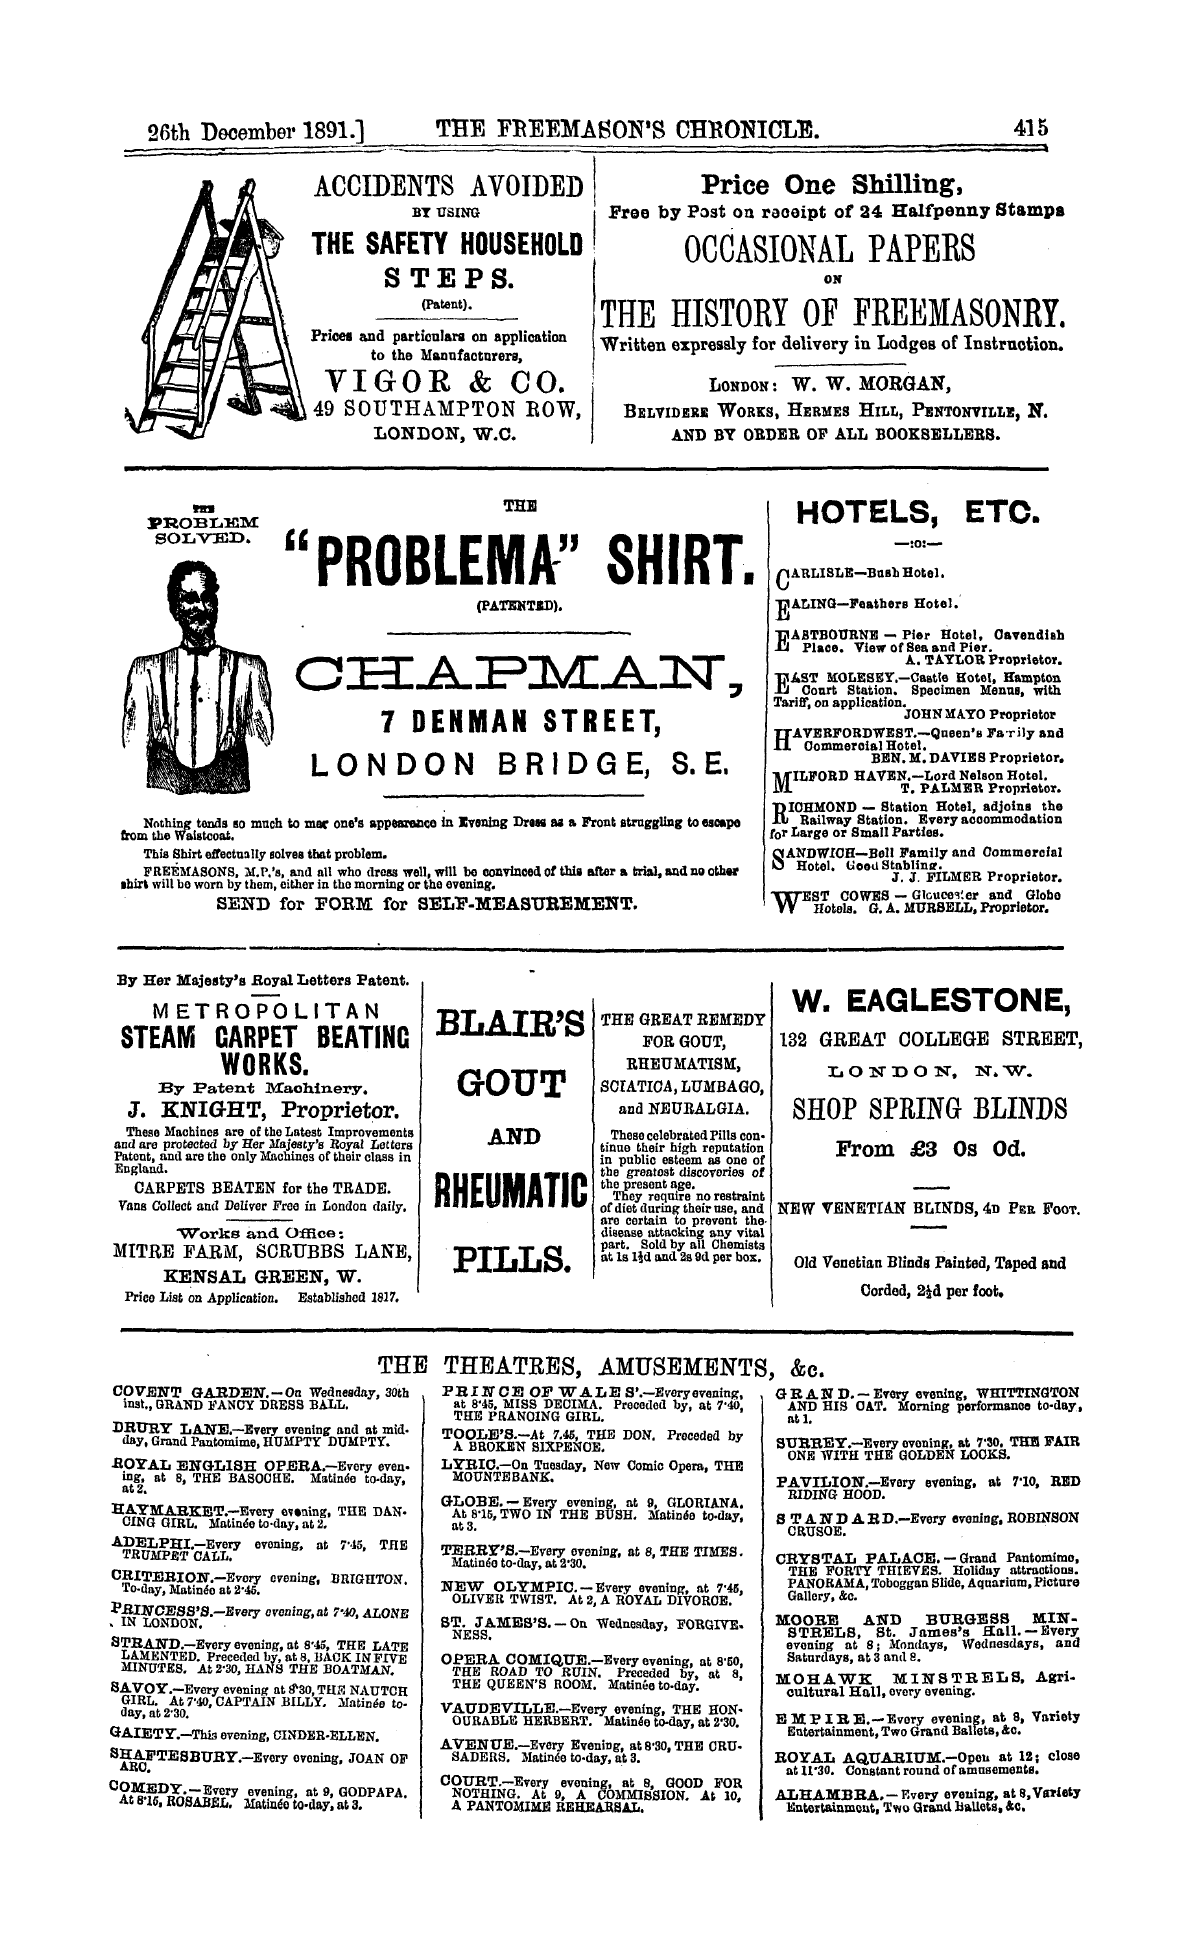 The Freemason's Chronicle: 1891-12-26 - The Theatres, Amusements, &C.